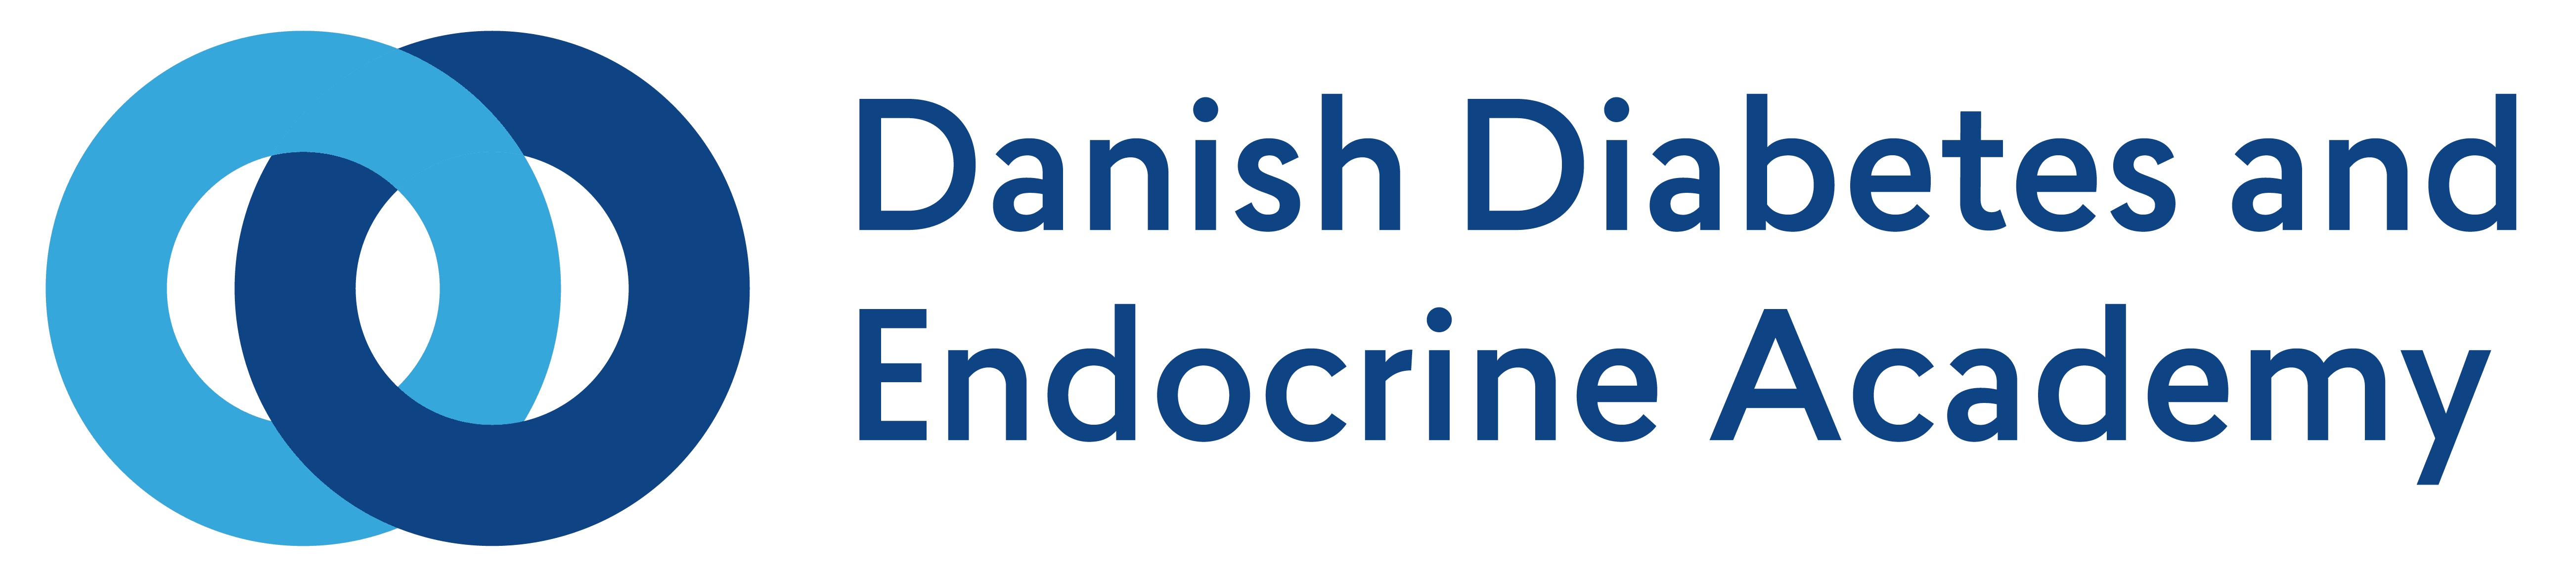 Danish Diabetes and Endocrine Academy